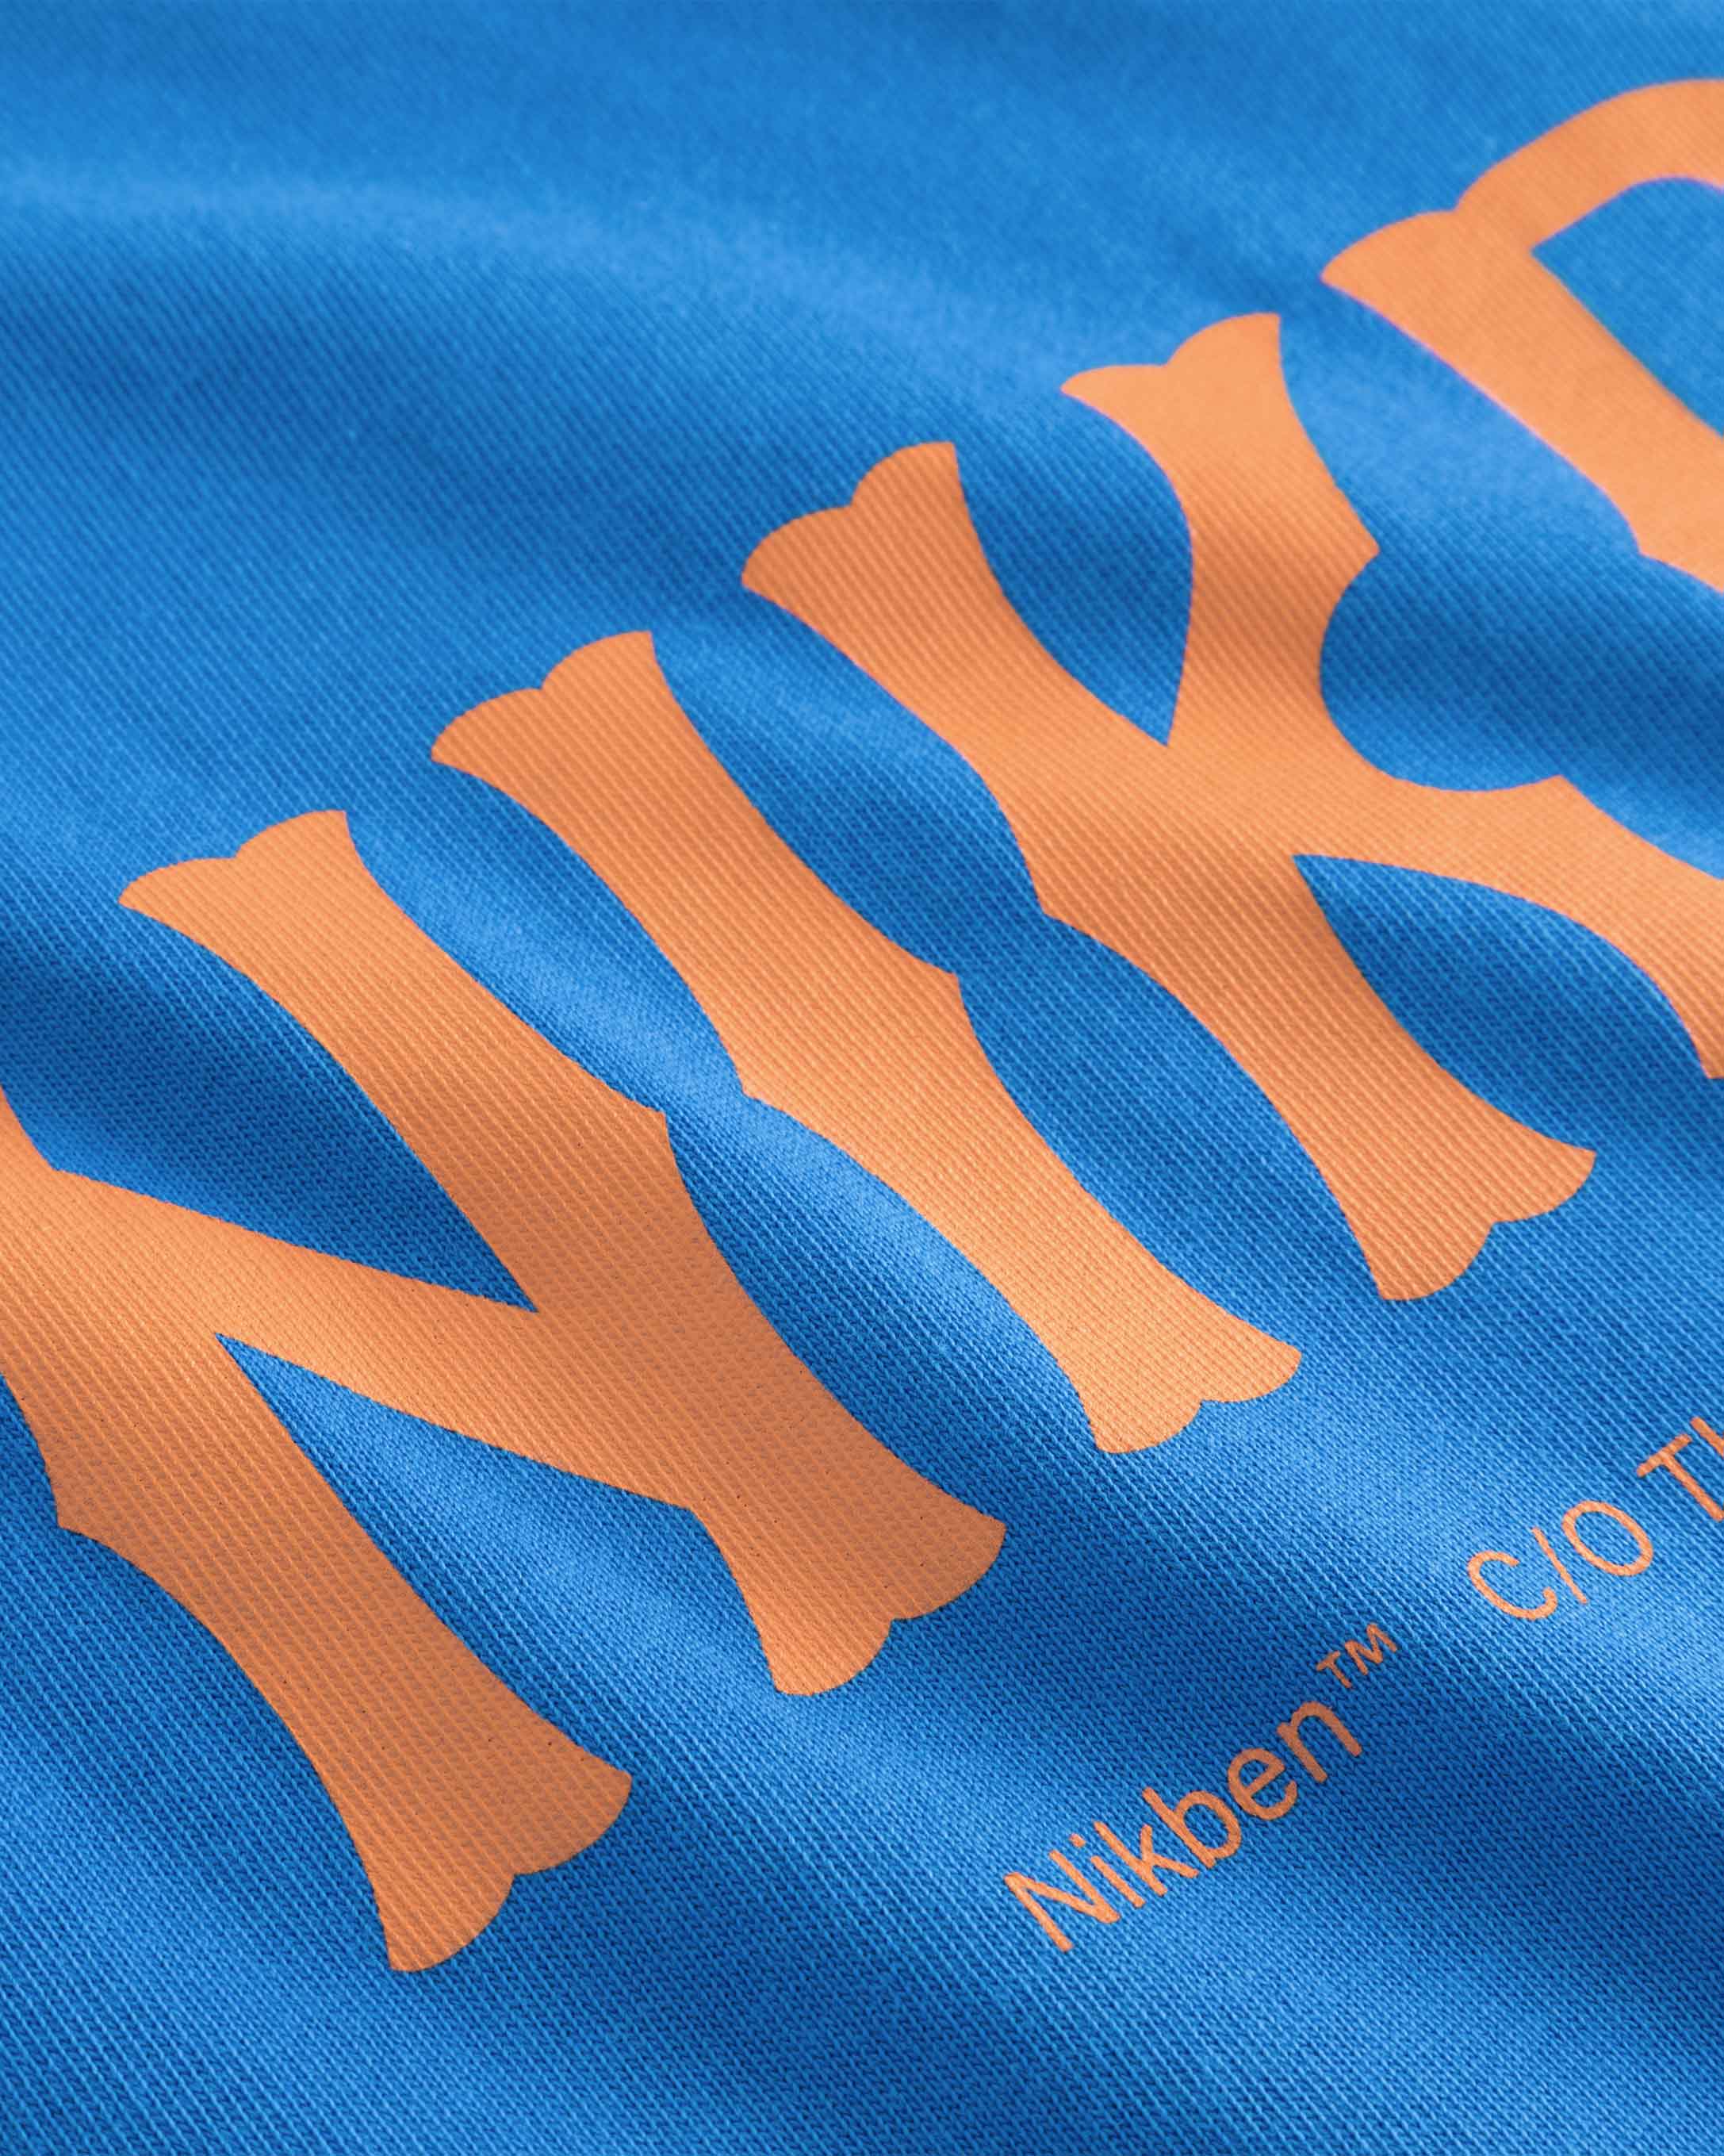 Close up of orange text print on a blue t-shirt.